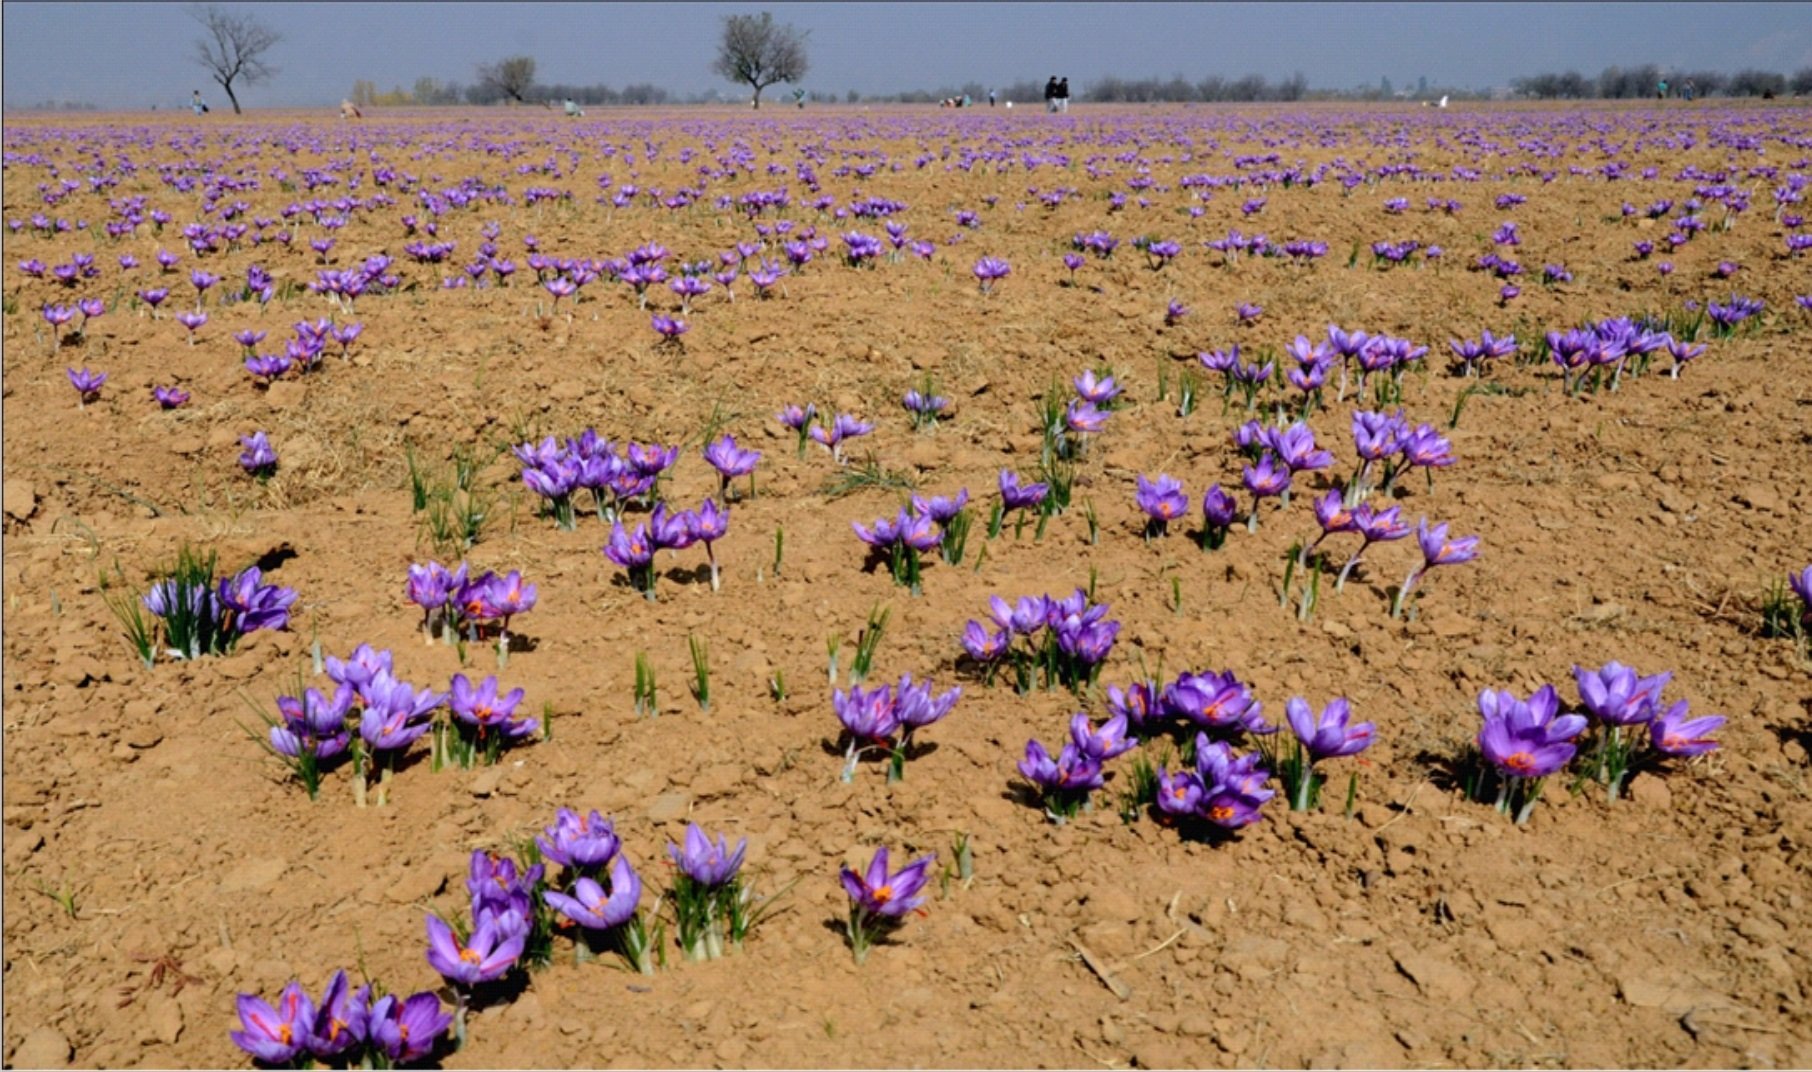 Saffron fields in full bloom [image by: Safina Nabi]